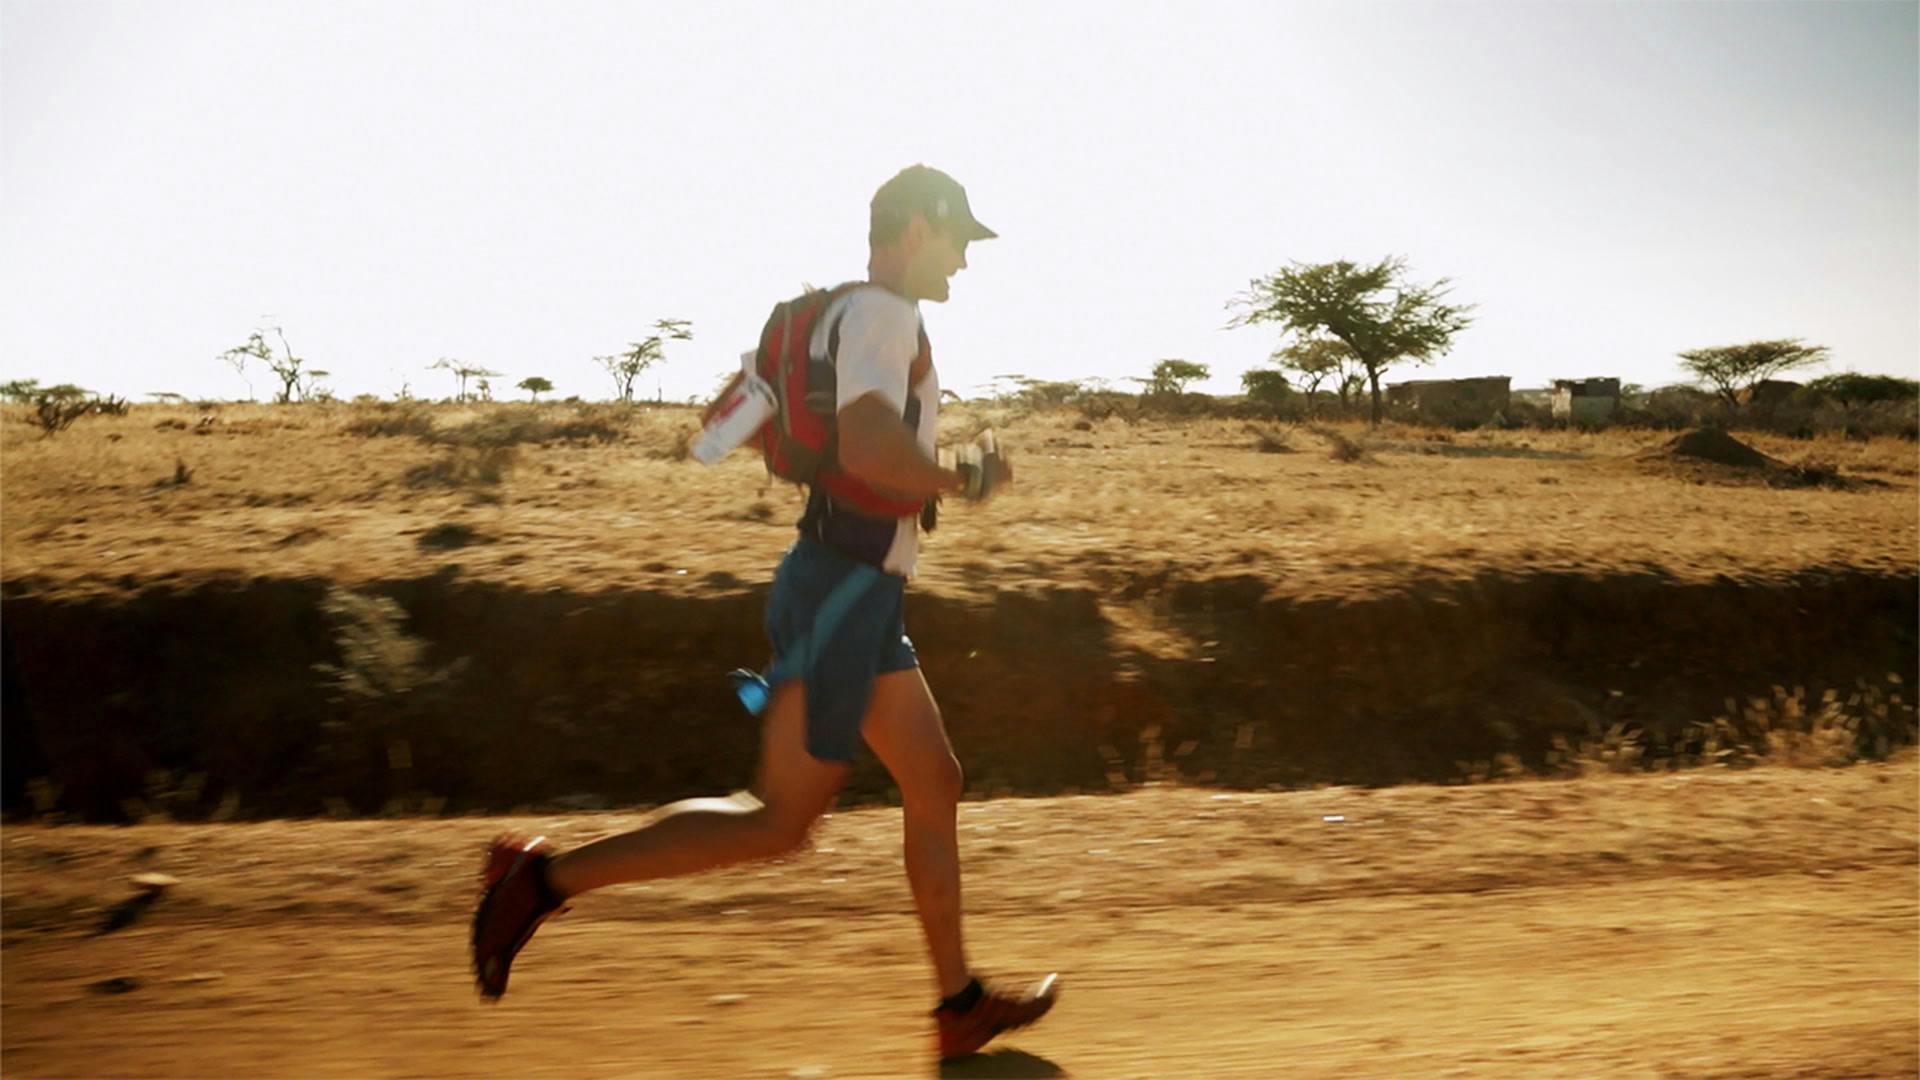 Ep 4 | Kenya: Born to Run